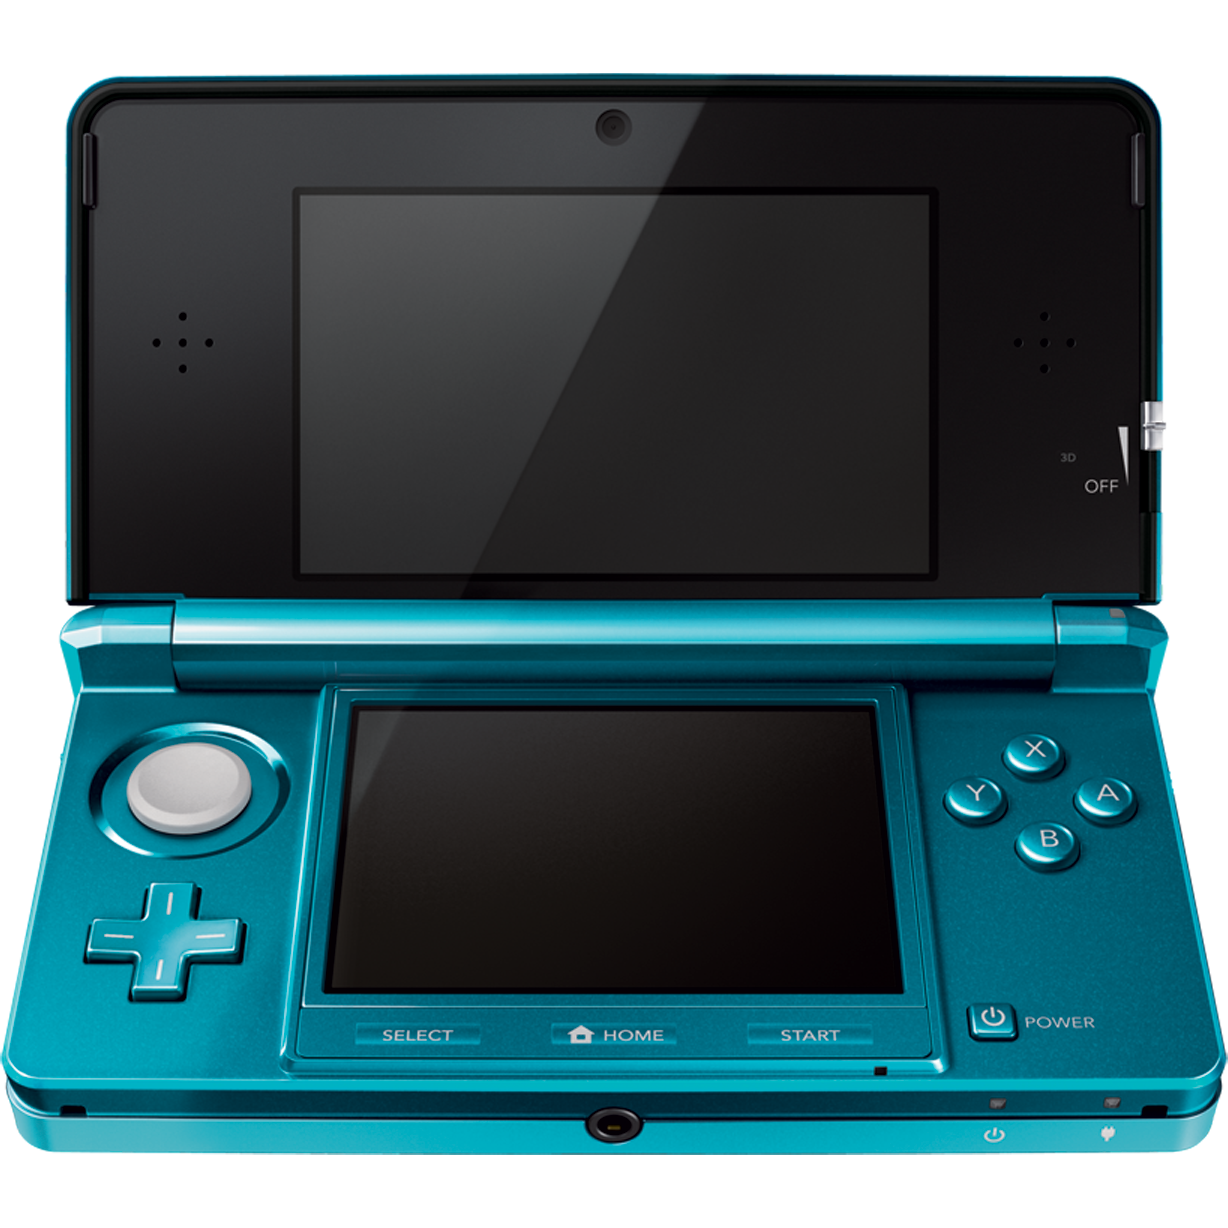 System: Nintendo 3DS [Handheld, 2011, Nintendo] - OC ReMix